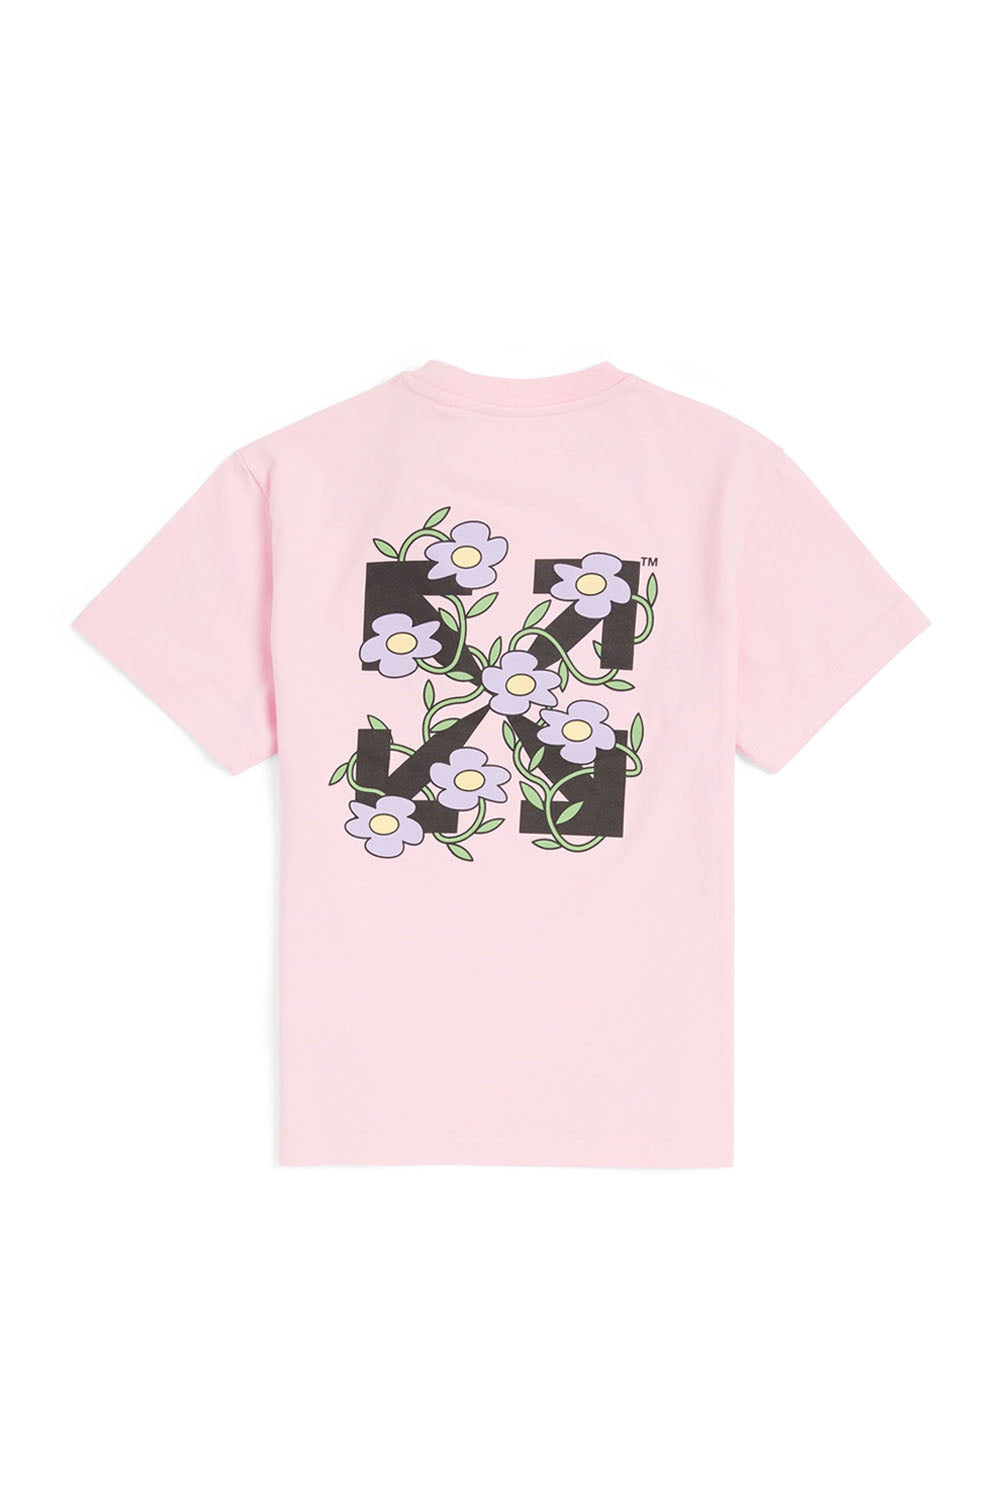 Off Flowers T-Shirt for Girls - Maison7